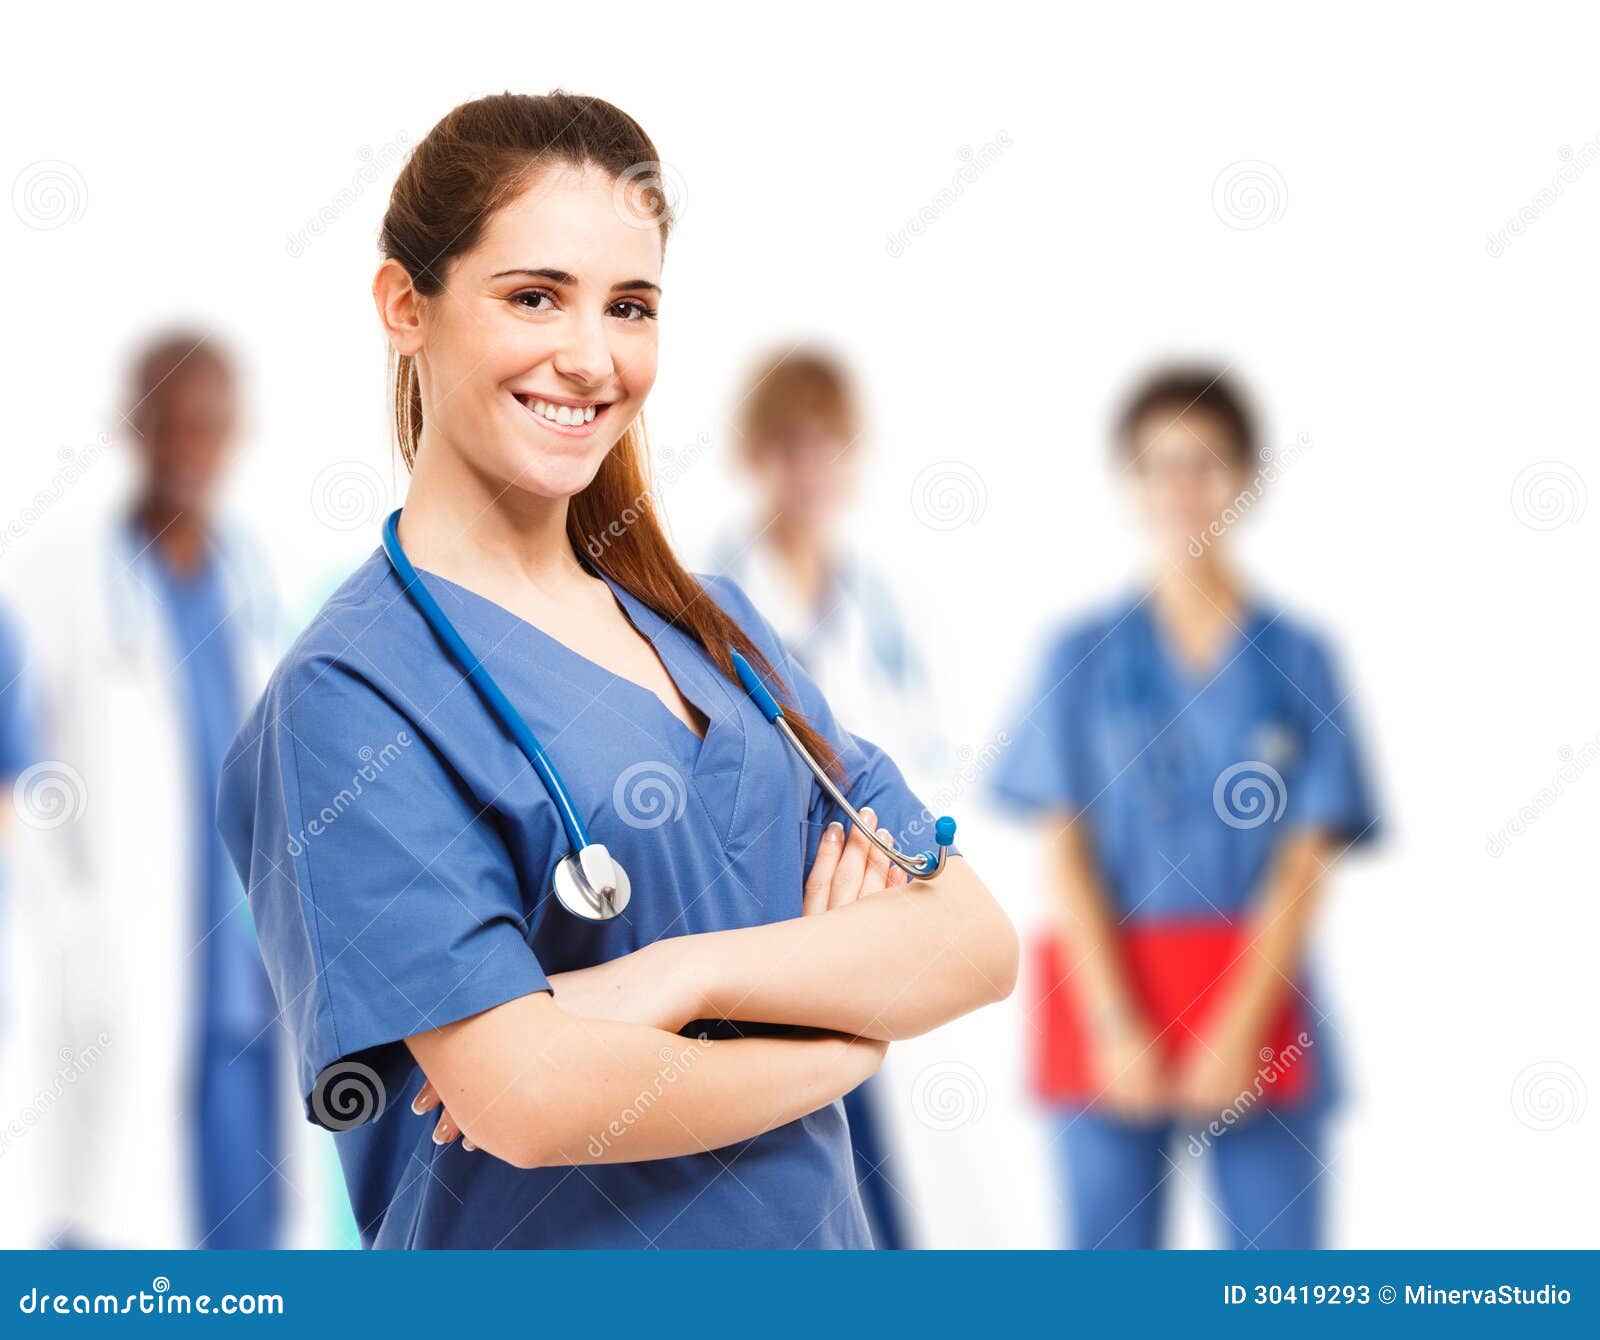 nurse and her team